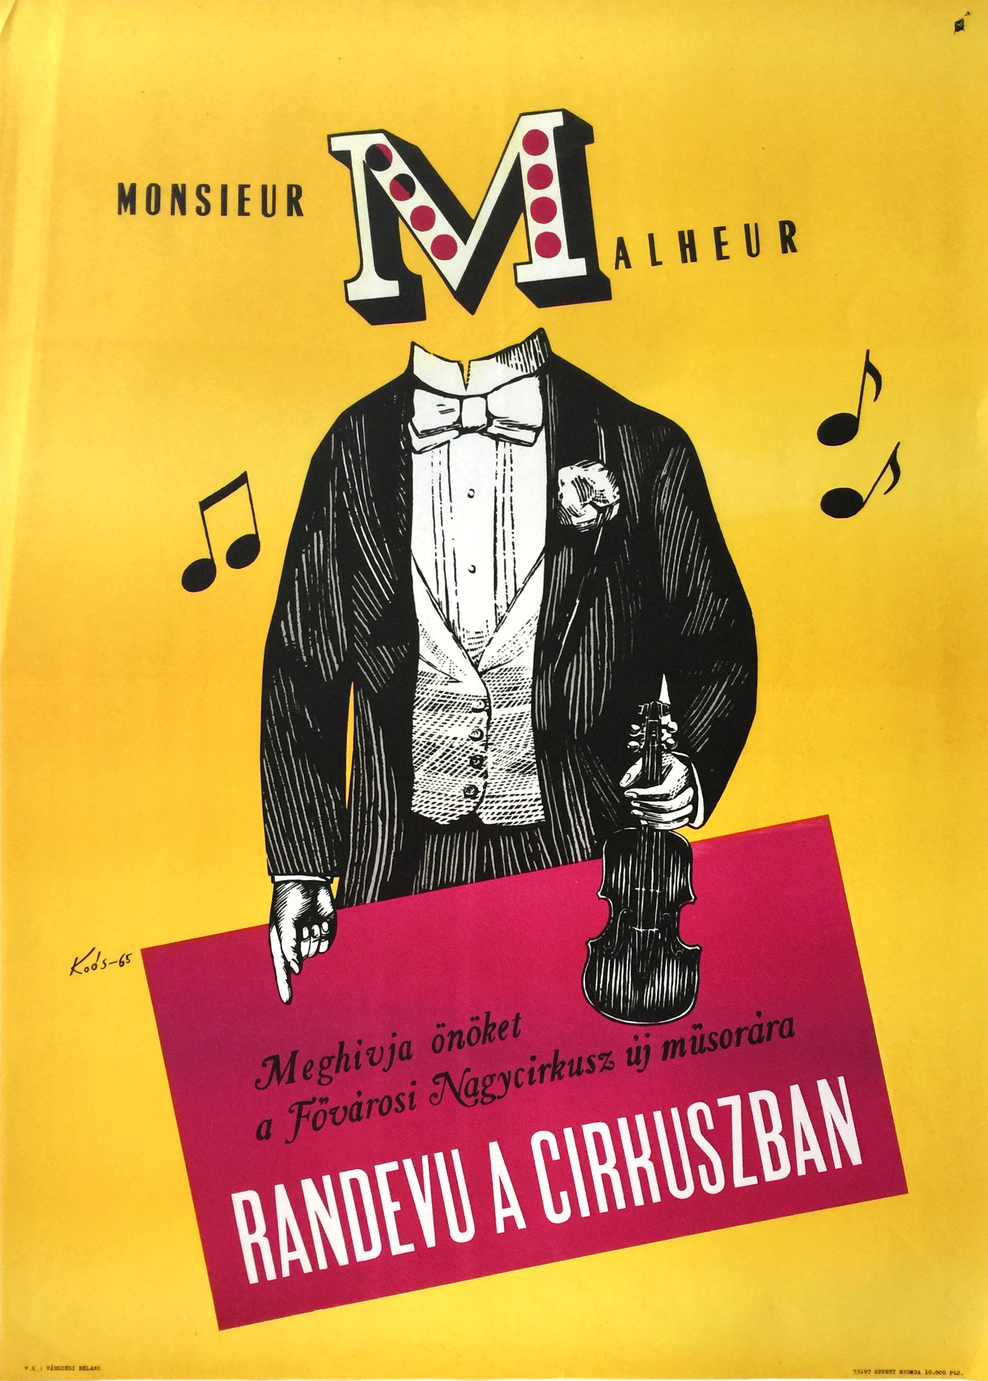 Monsieur Malheur - Rendezvous in the circus - Budapest Metropolitan Grand Circus